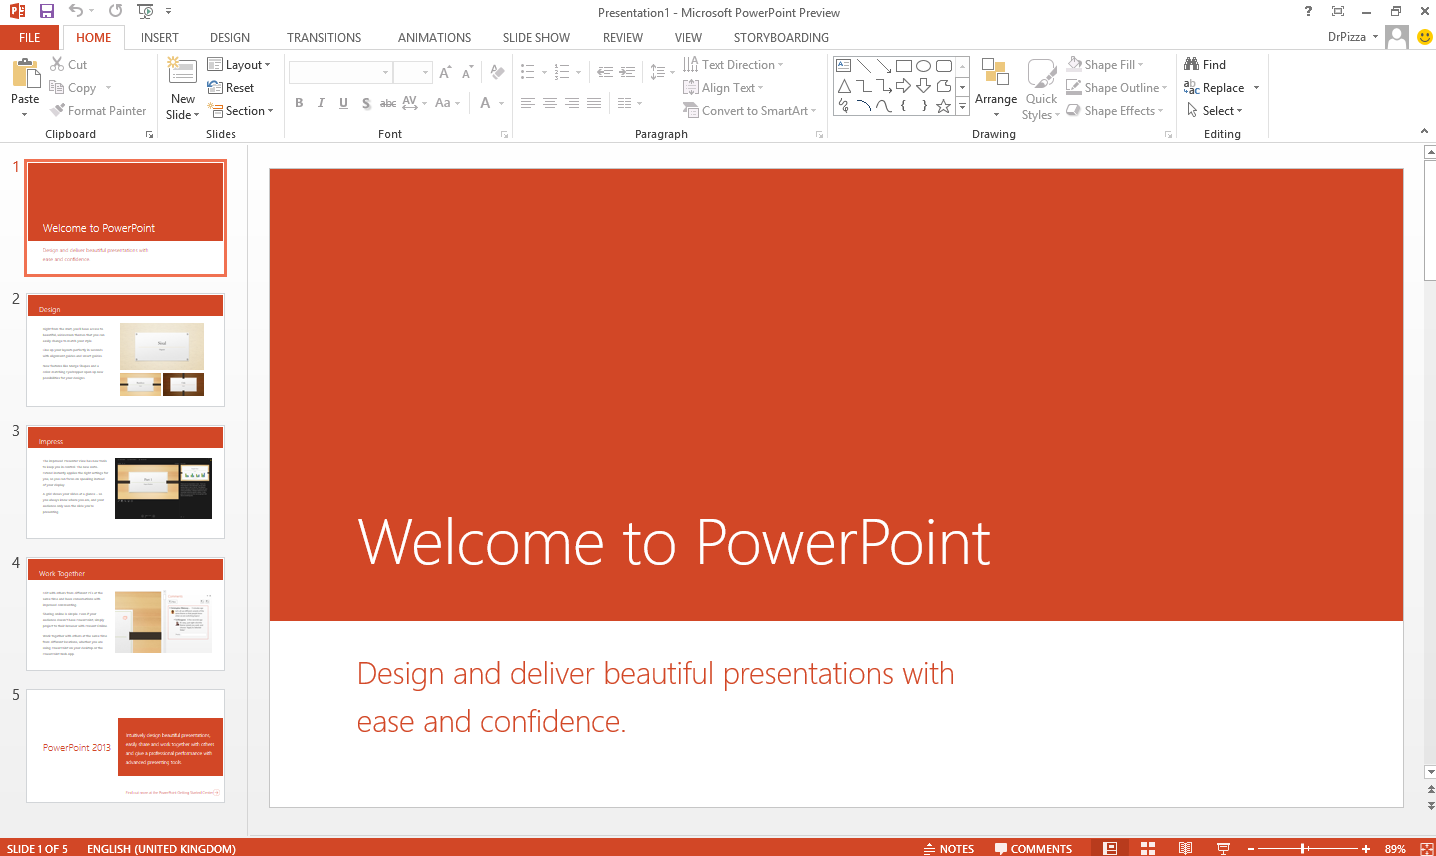 powerpoint 2013 new presentation